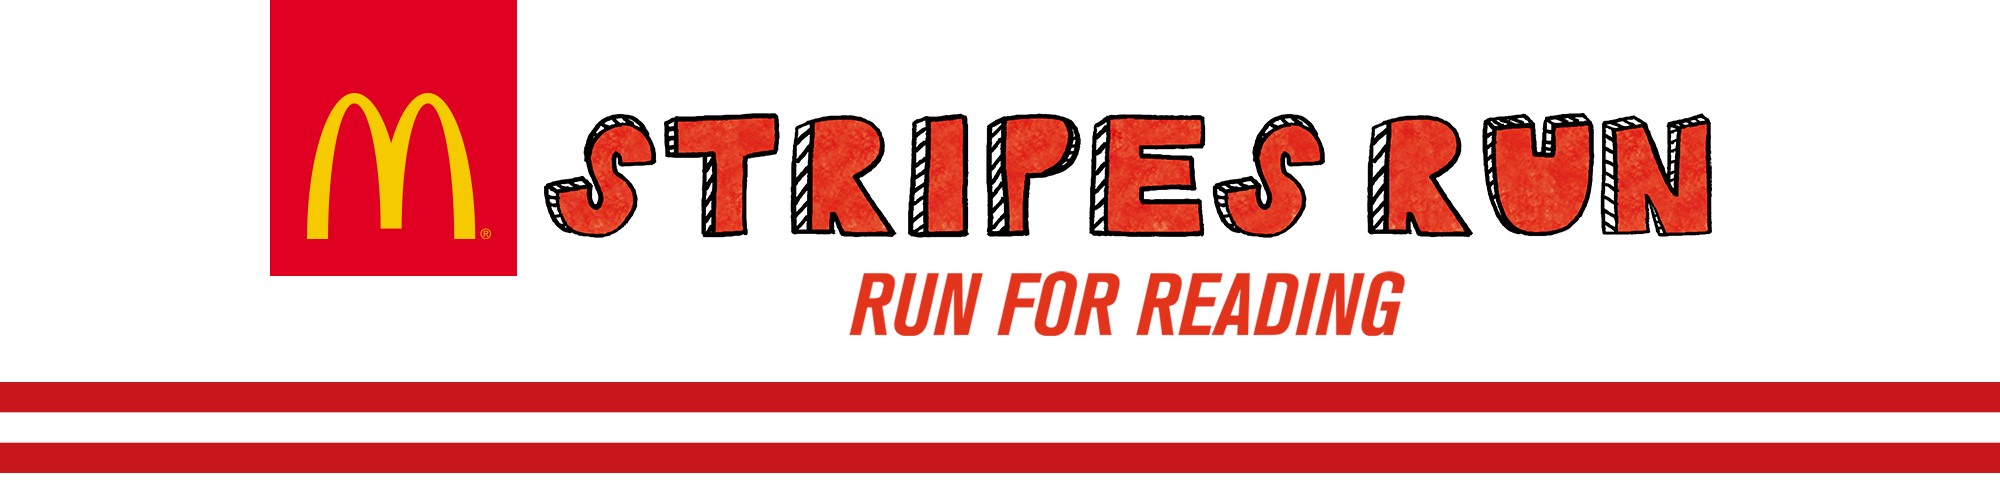 Stripes Run Cebu